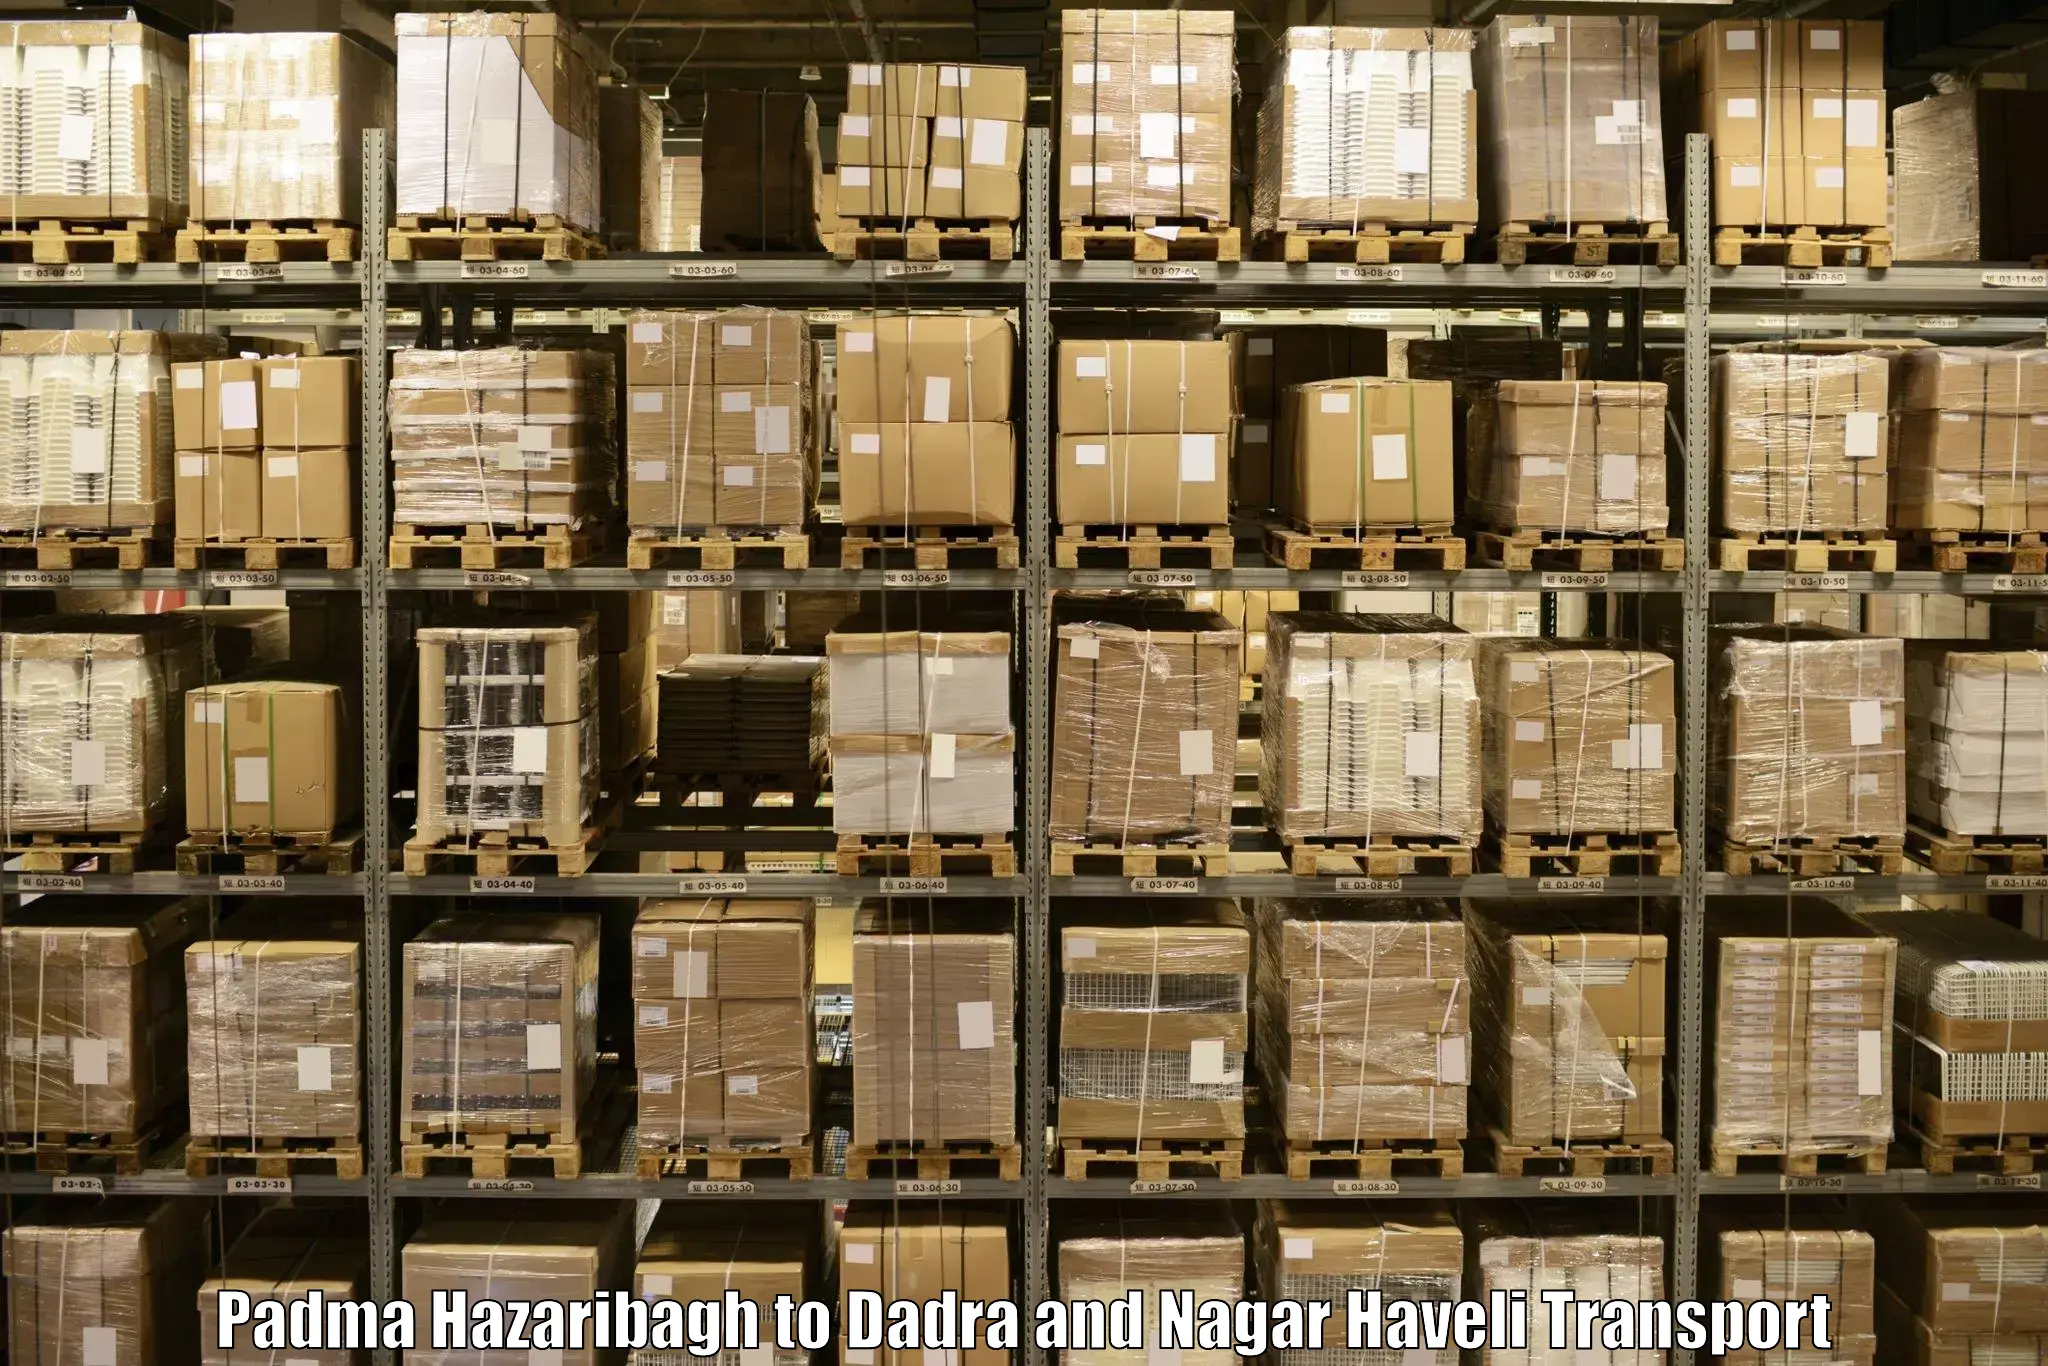 Delivery service Padma Hazaribagh to Dadra and Nagar Haveli